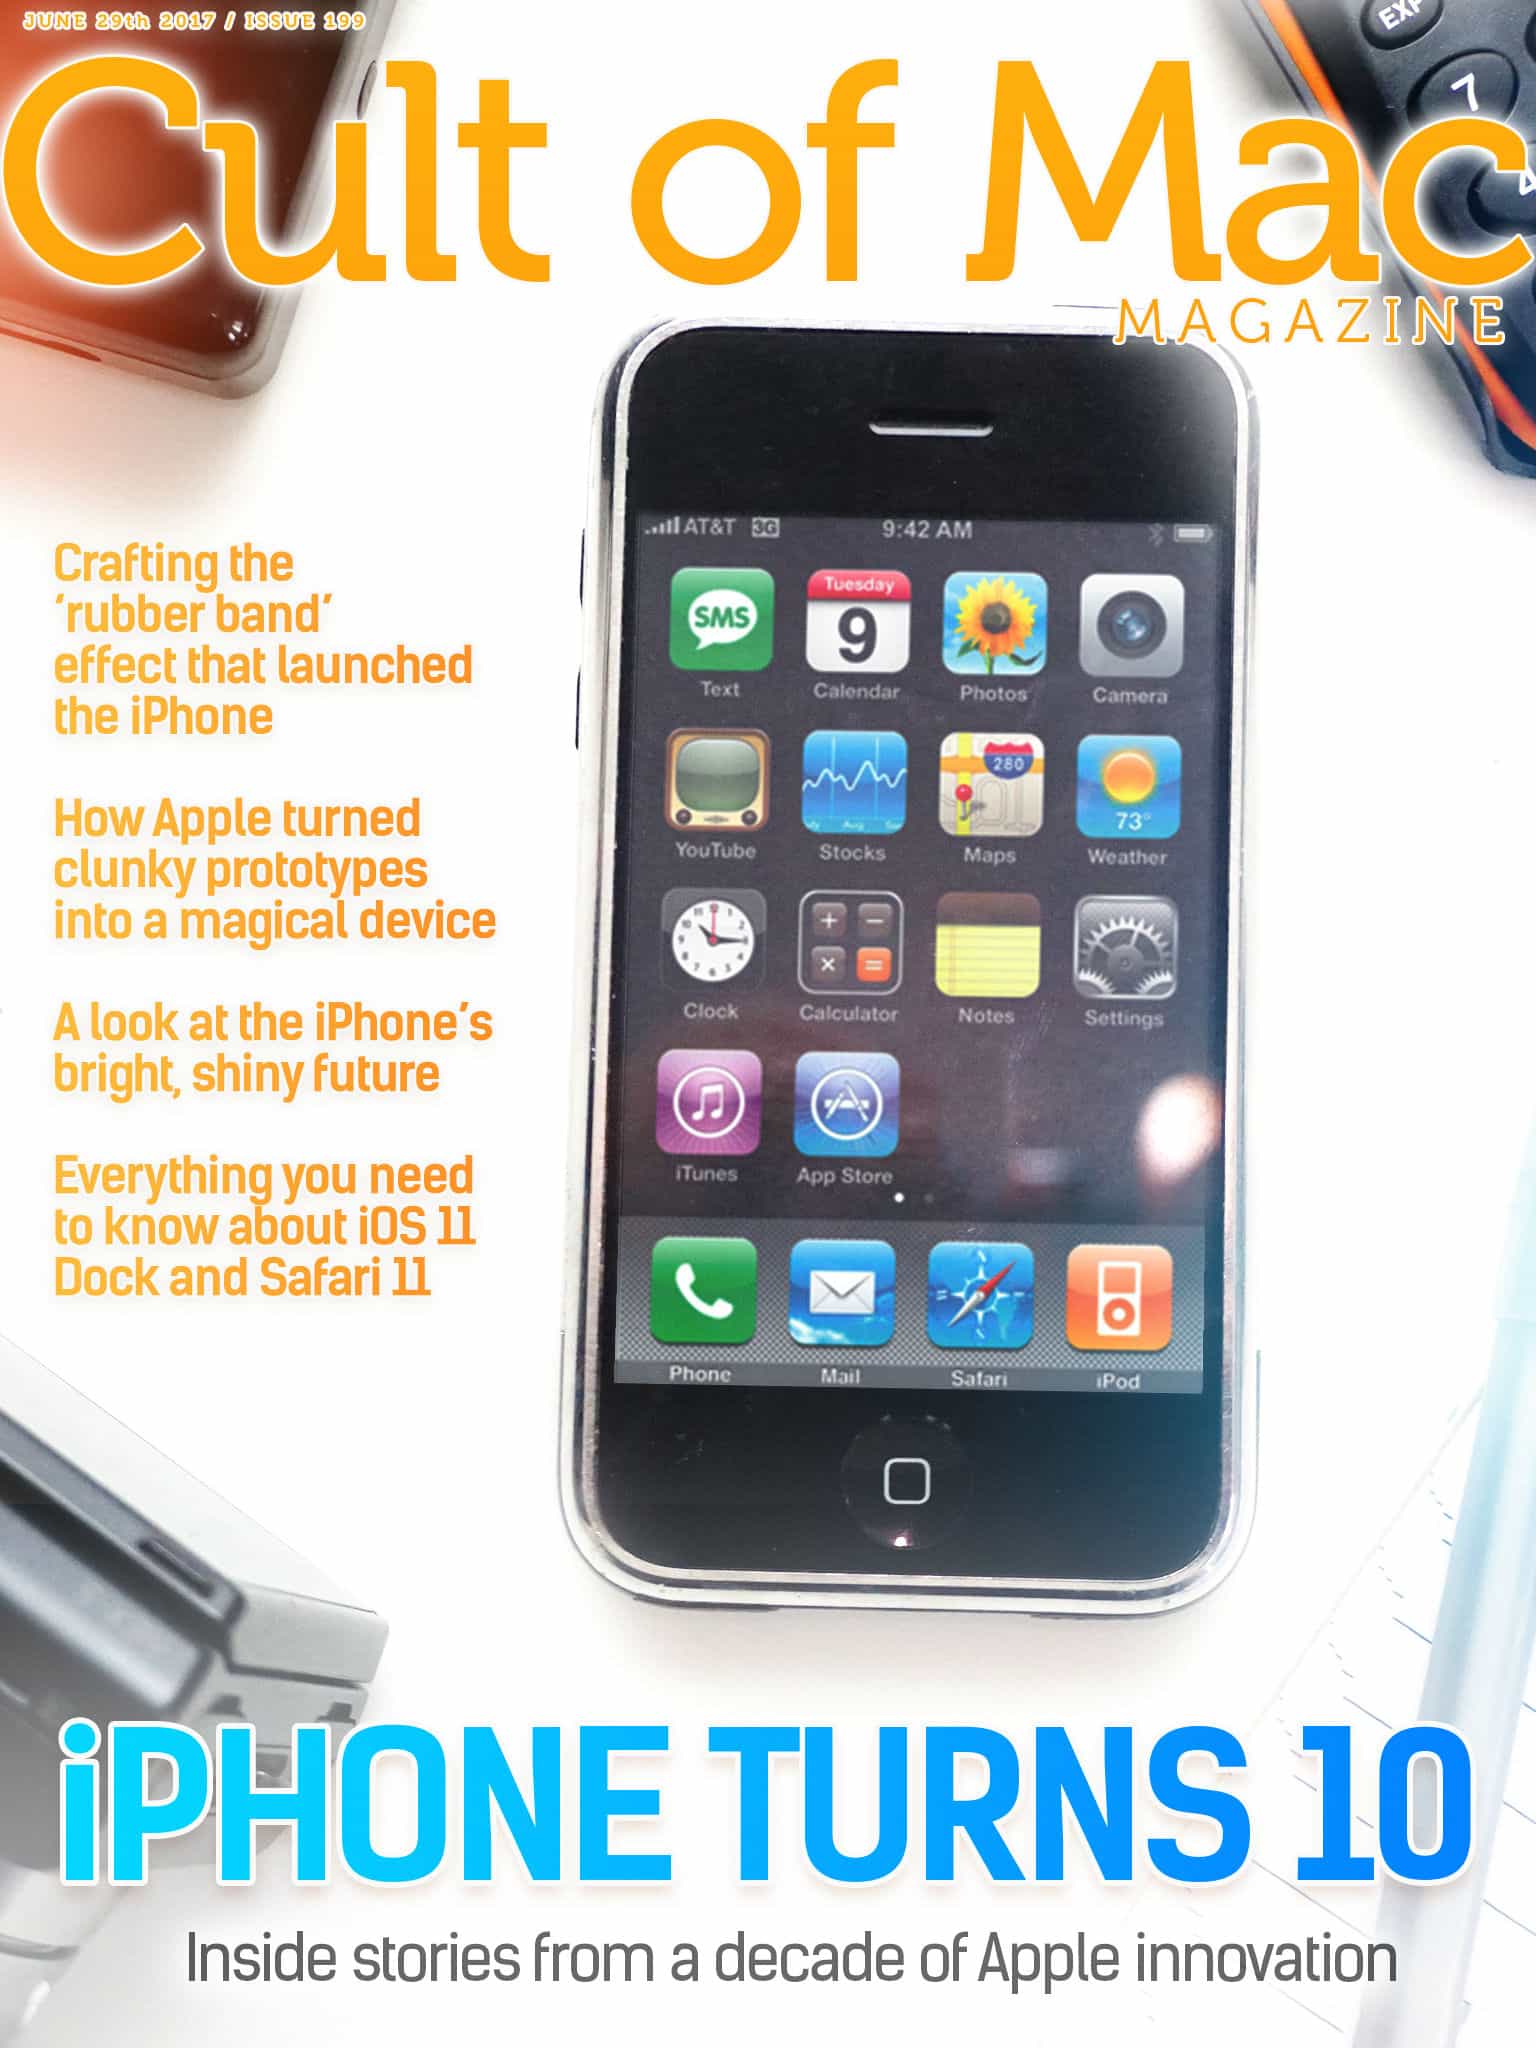 Cult of Mac Magazine: iPhone Turns 10